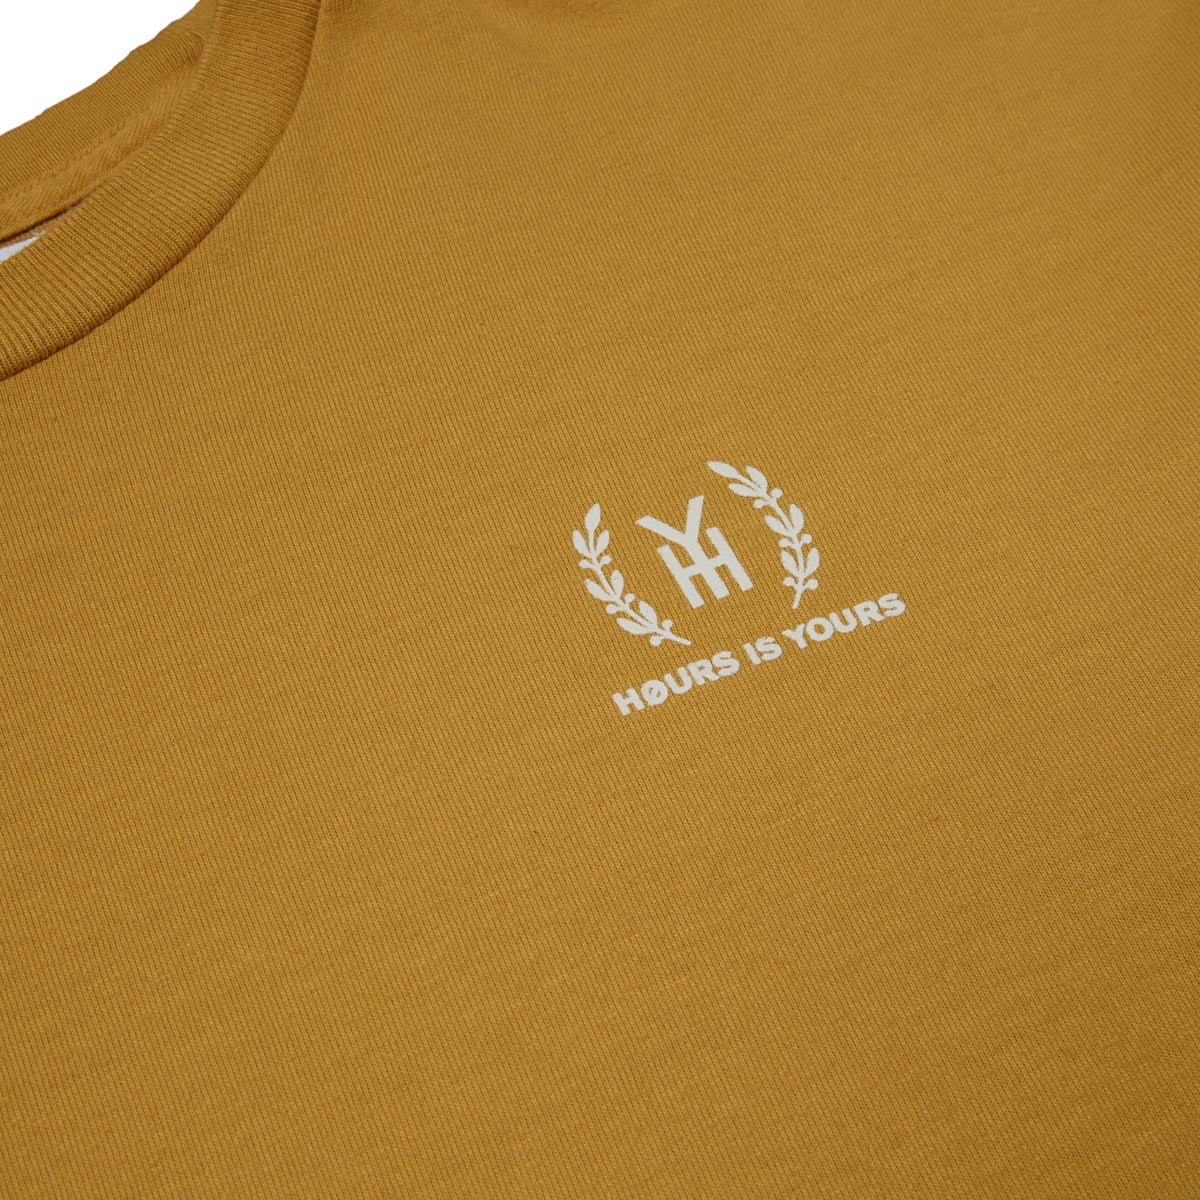 Hours Is Yours Monogram T-Shirt - Vinatge Gold image 2